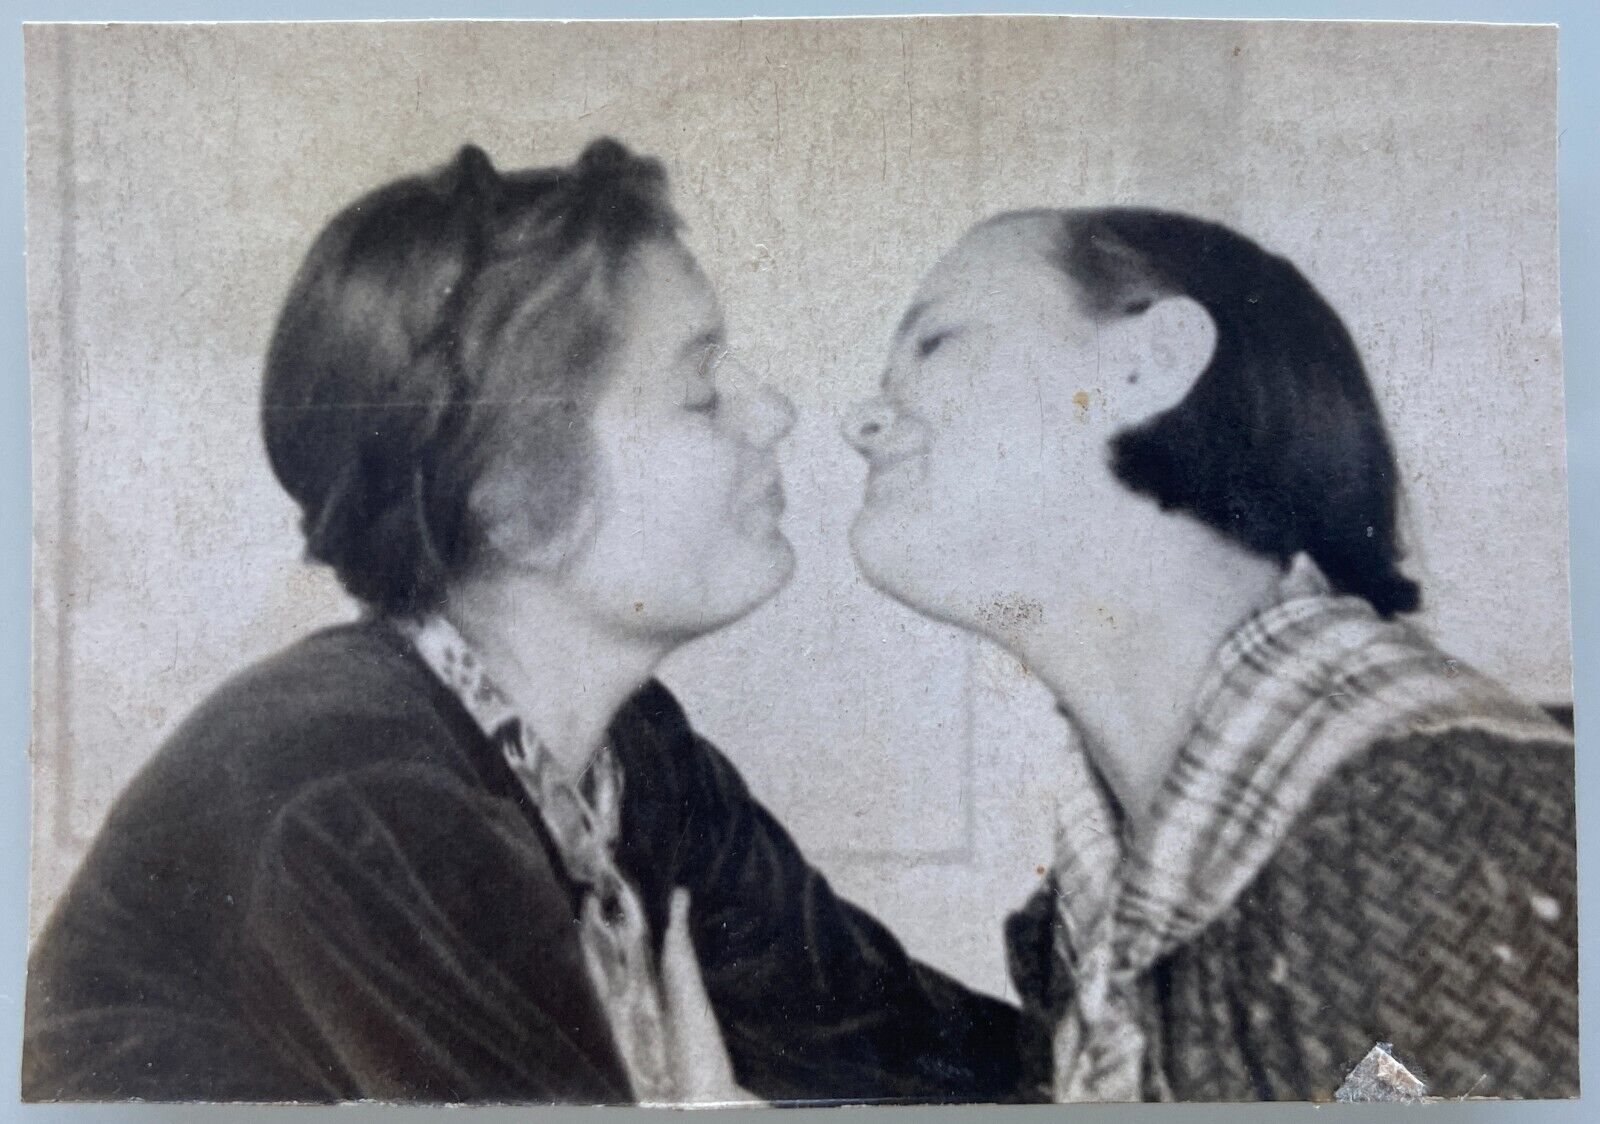 1940s Lesbian KISS Affectionate Couple Women Kissing Gay Interest Vintage Photo